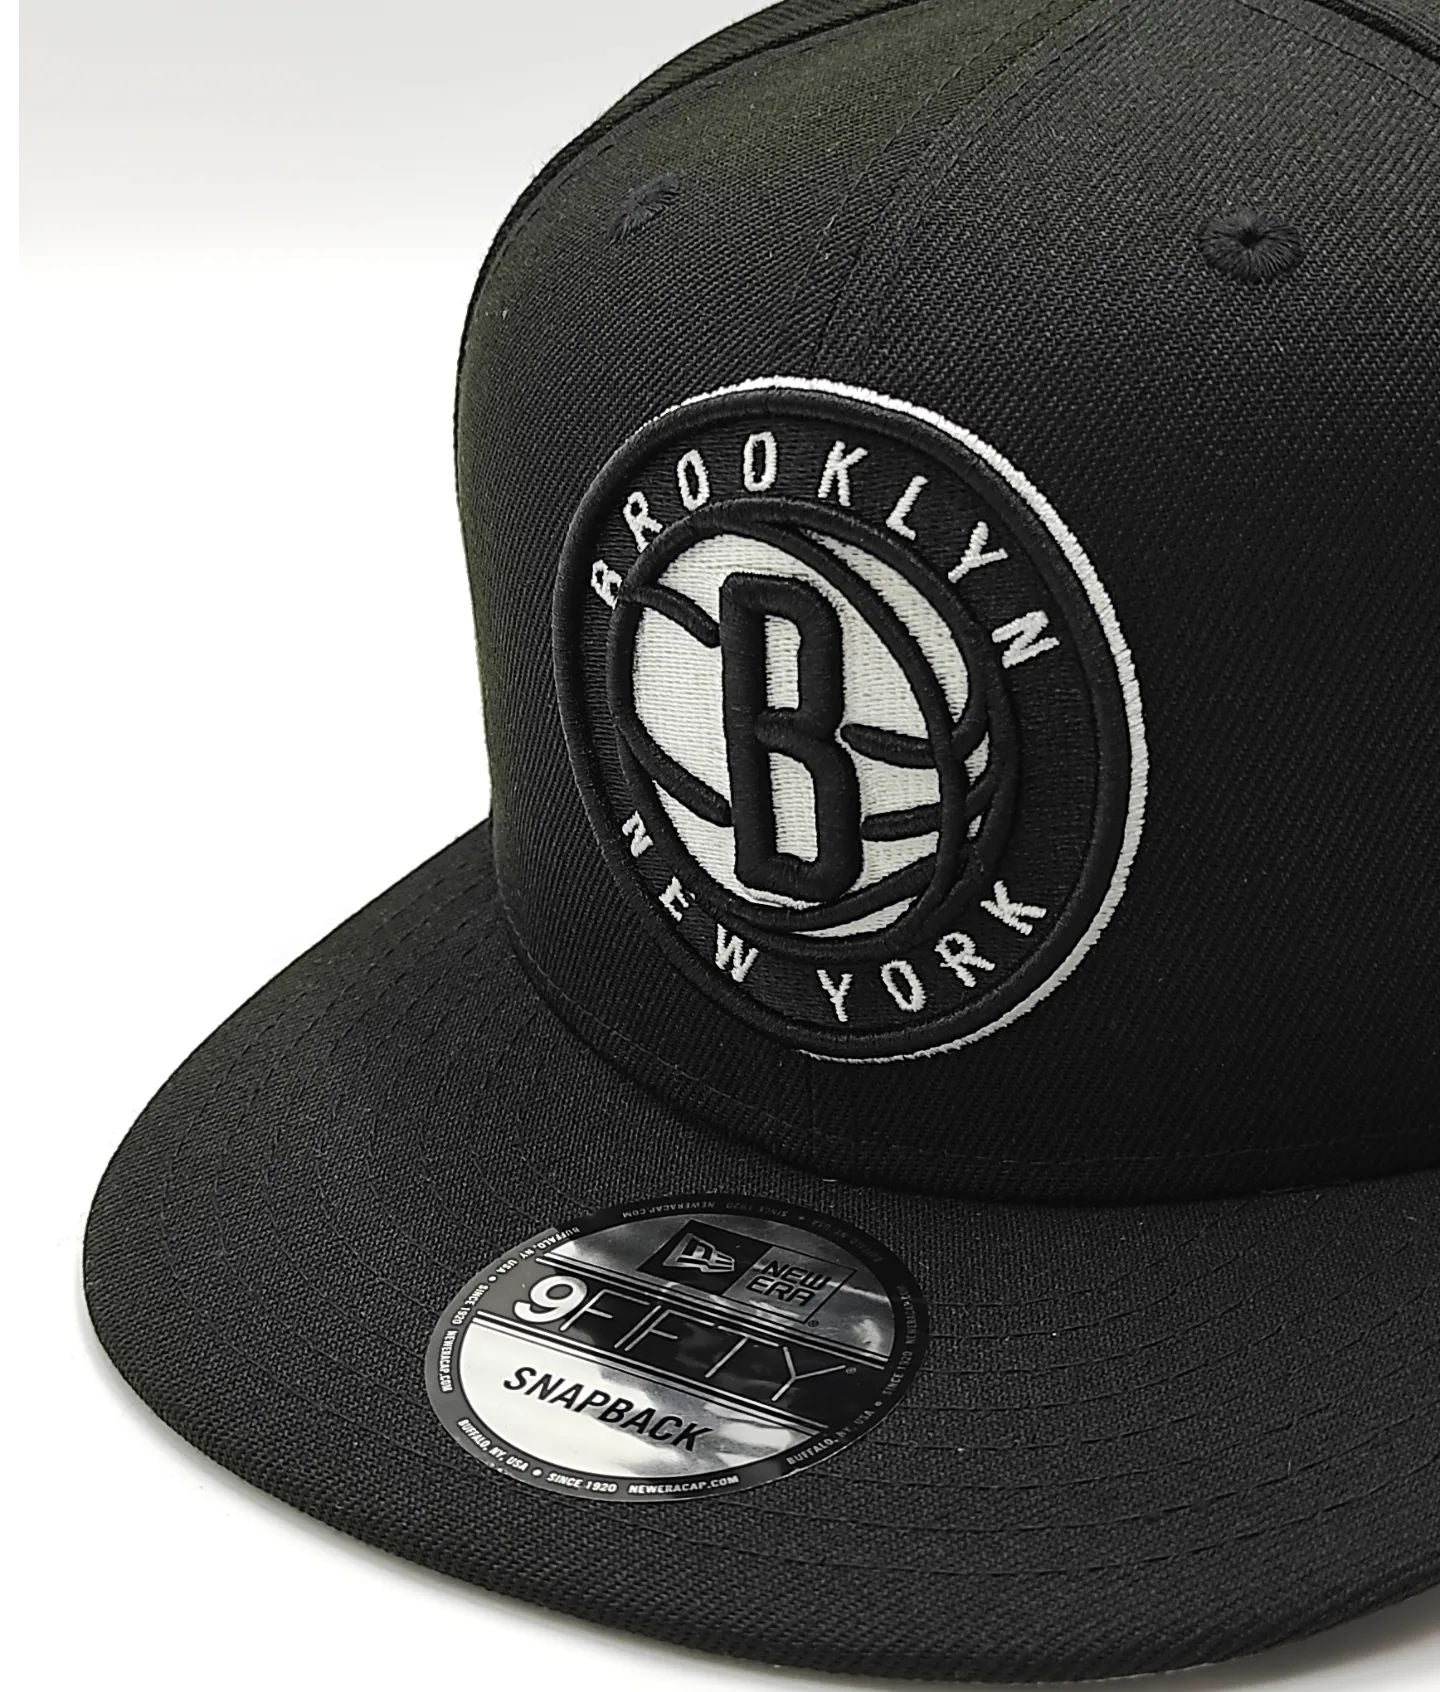 New Era Brooklyn Nets 9fifty snapback negra.